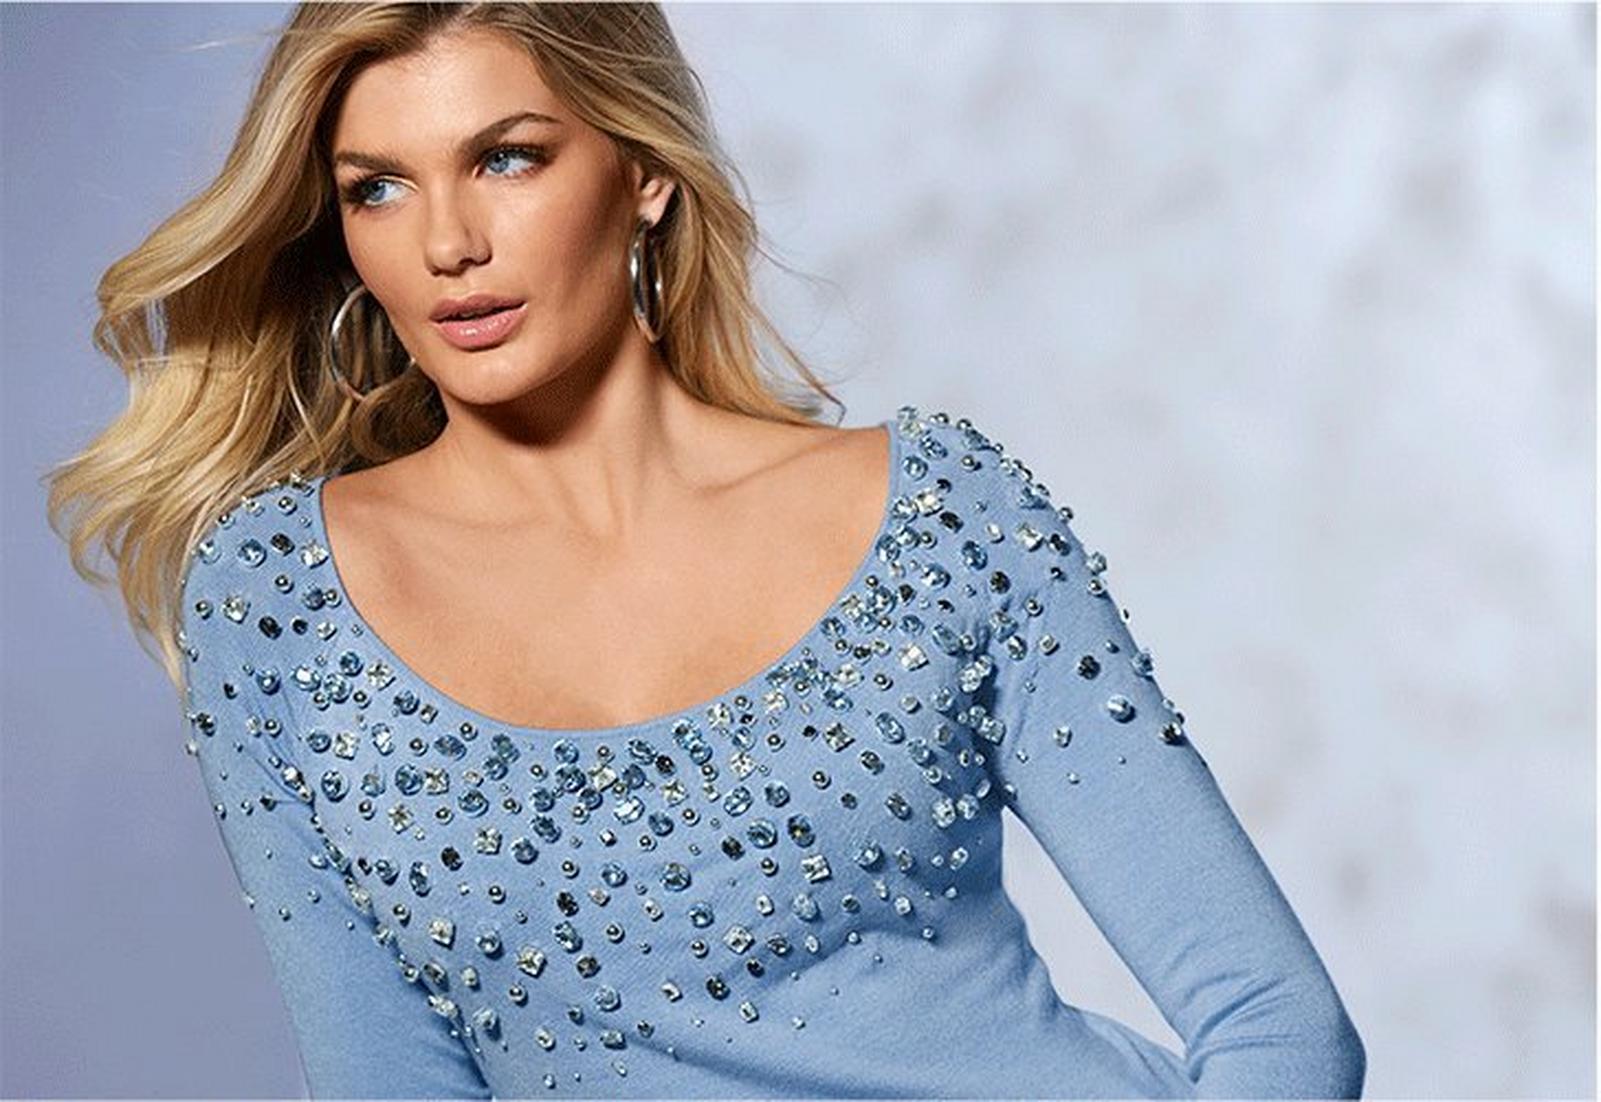 model wearing a light blue jewel embellished scoop neck sweater.